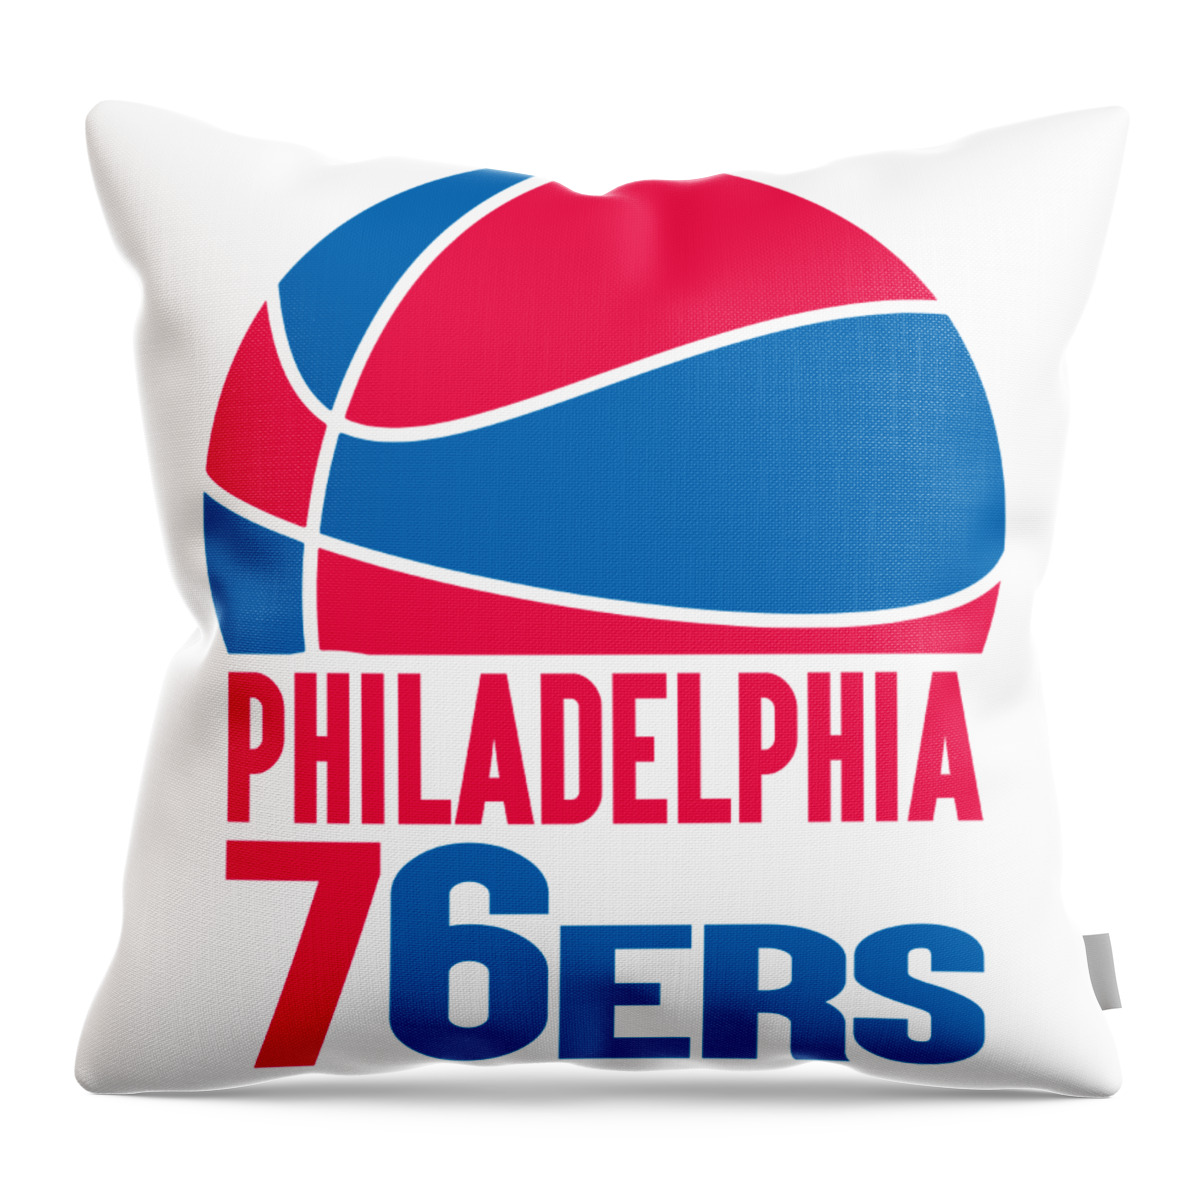 Philadelphia 76ers Retro Shirt T-Shirt by Joe Hamilton